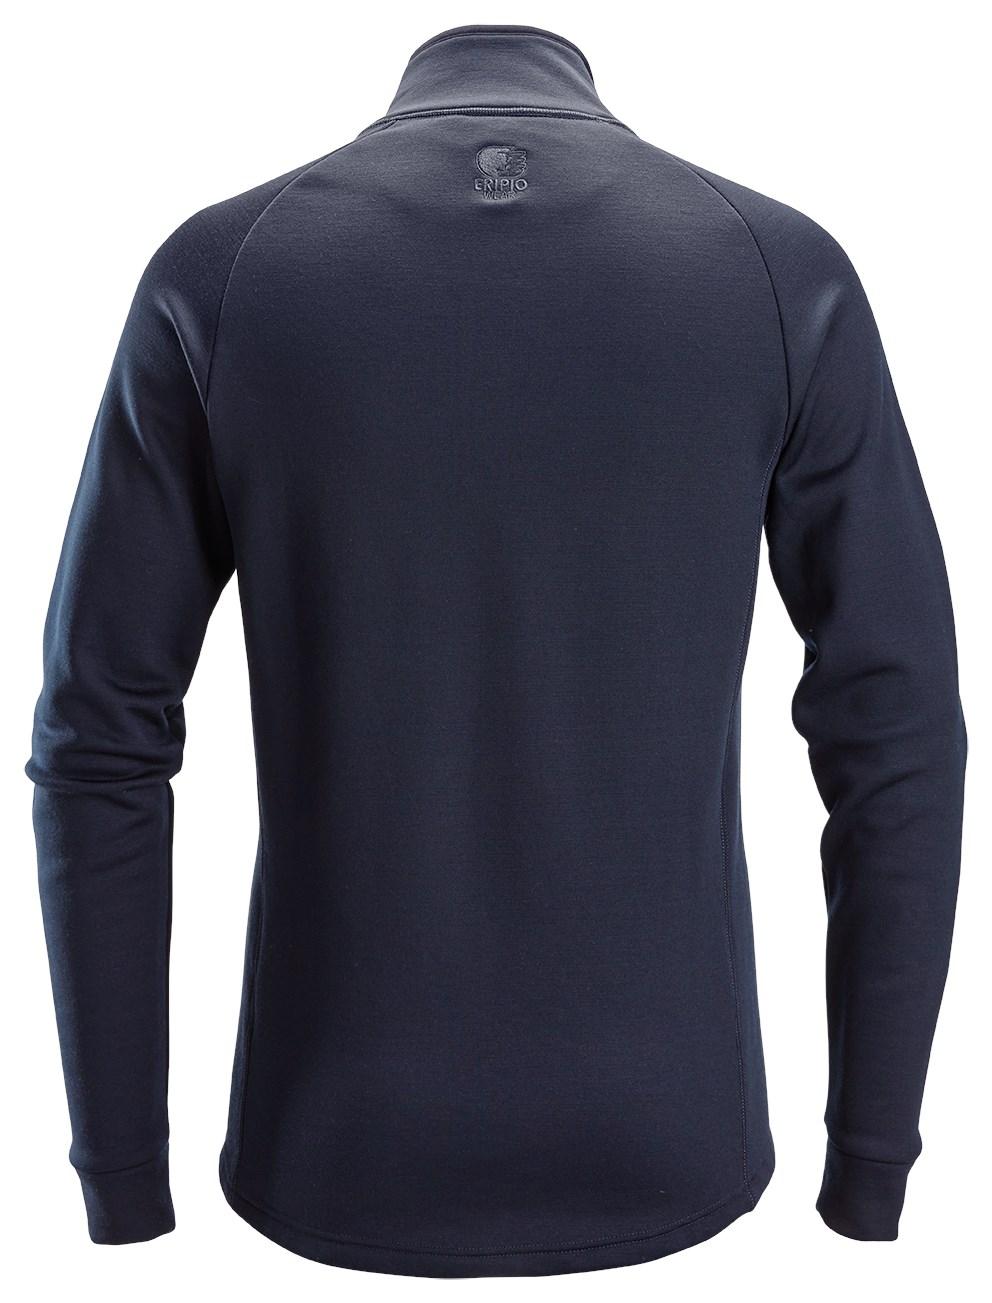 Accelero, Full-Zip Sweater